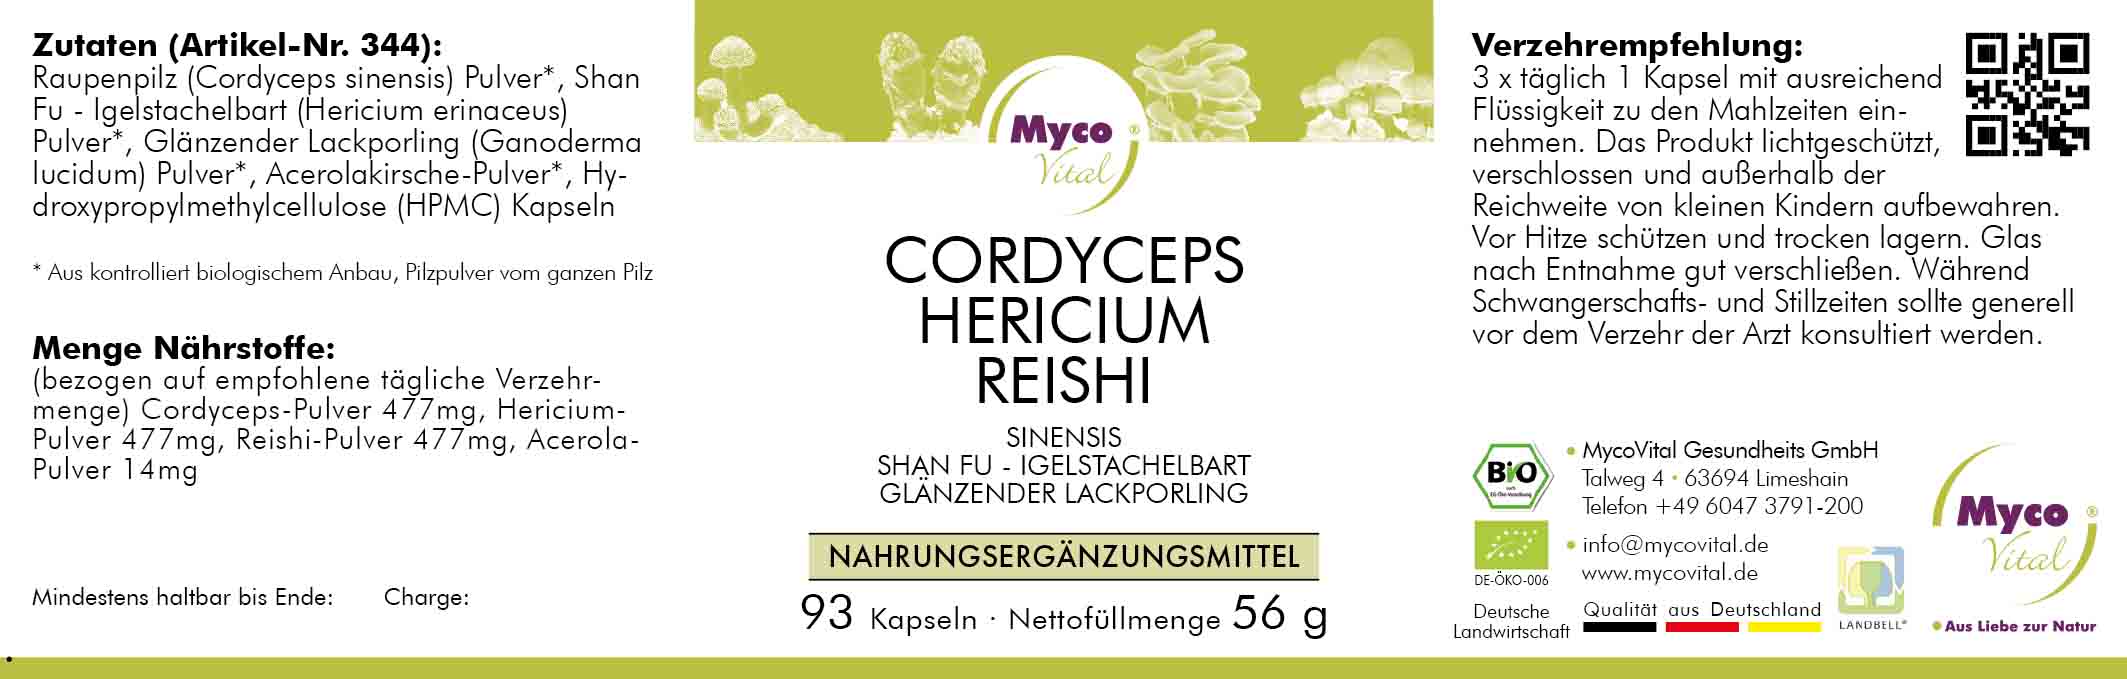 Cordyceps-Hericium-Reishi Organic Mushroom Powder Capsules (Blend 344)